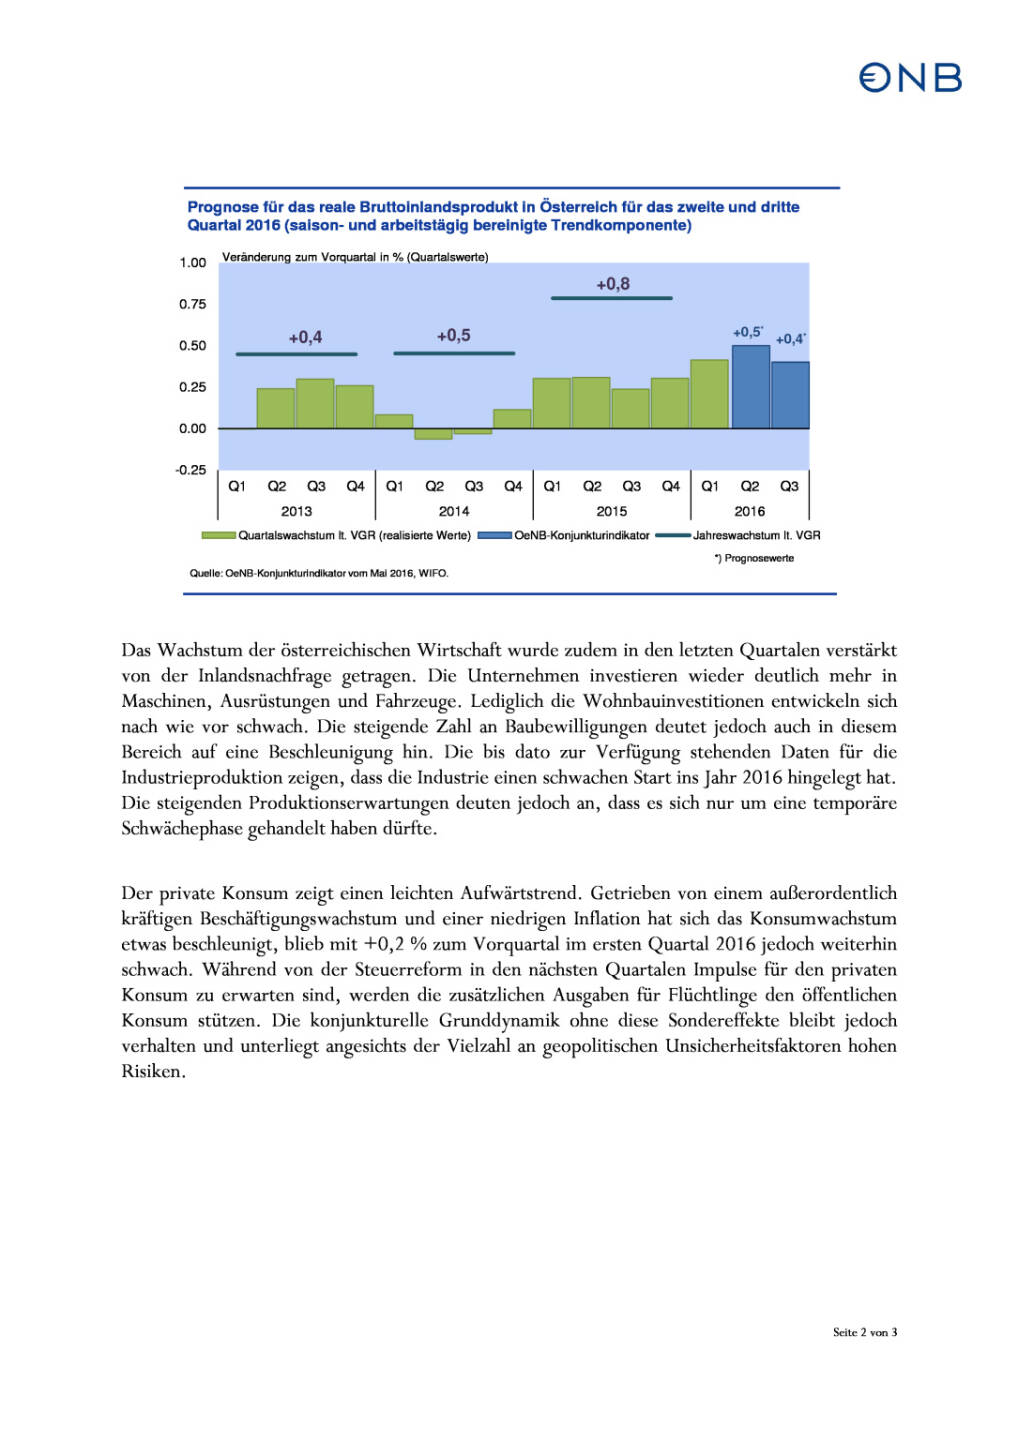 OeNB: Konjunkturerholung in Österreich, Seite 2/3, komplettes Dokument unter http://boerse-social.com/static/uploads/file_1050_oenb_konjunkturerholung_in_osterreich.pdf